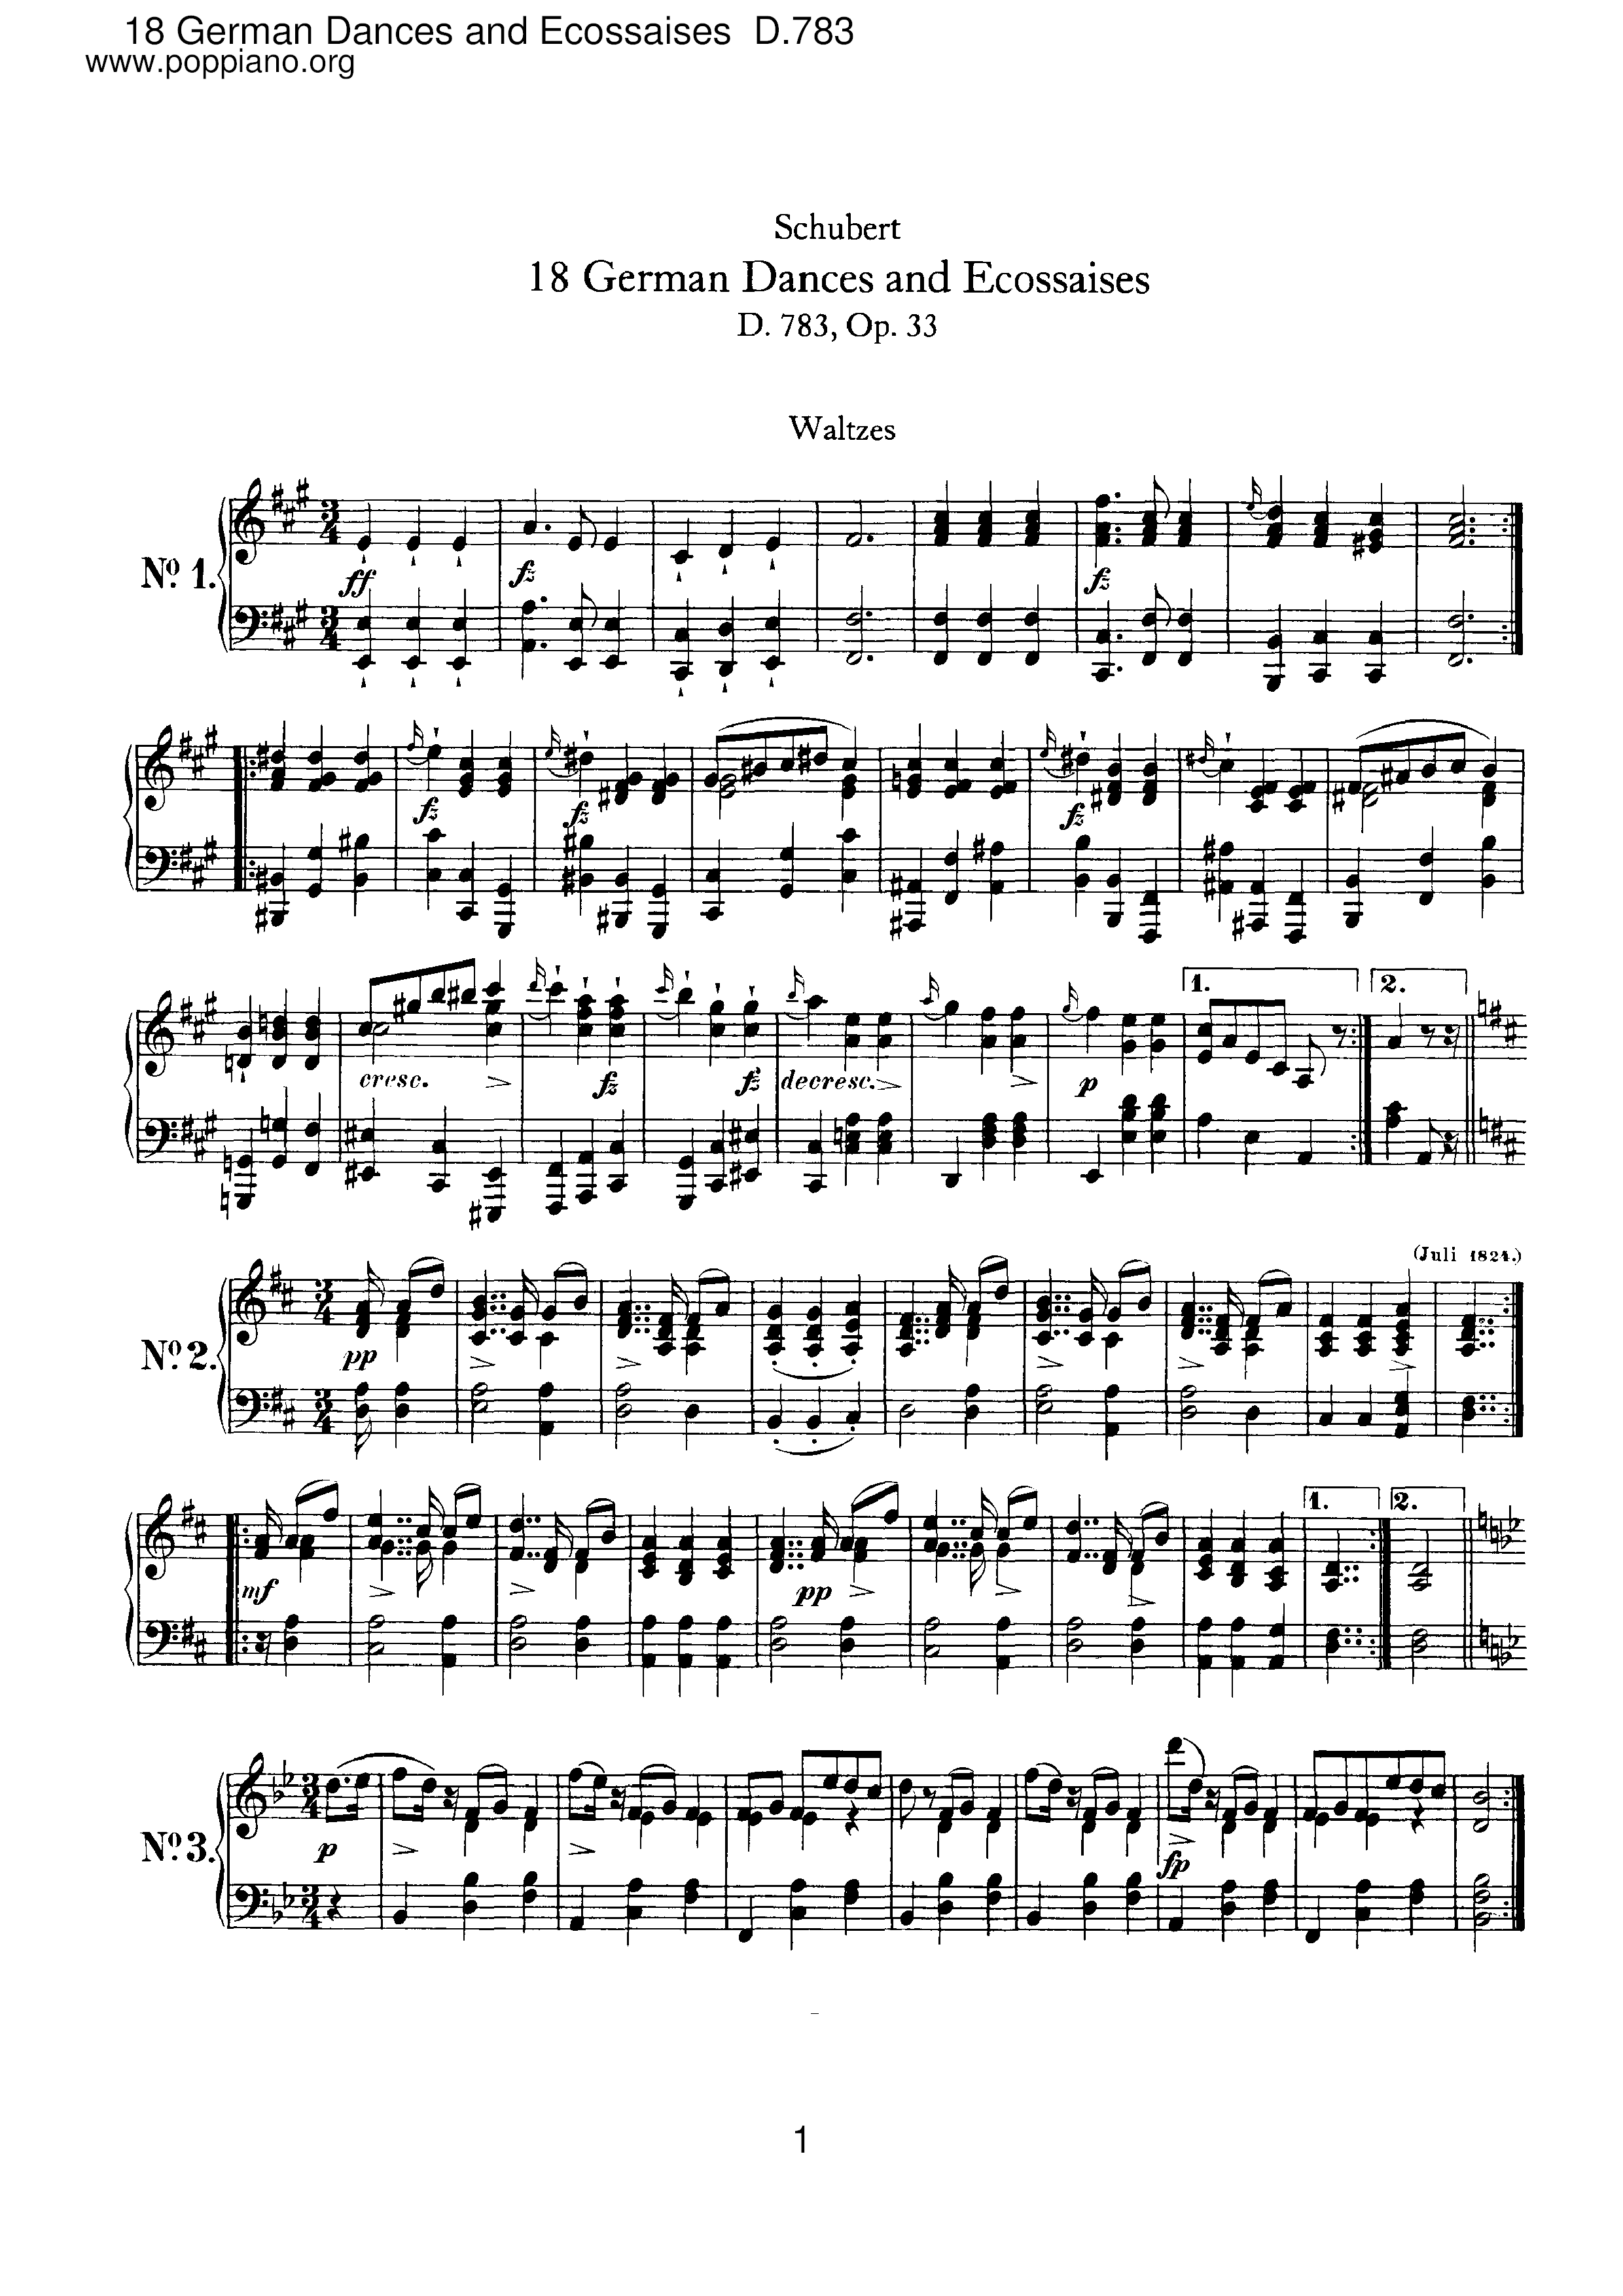 18 German Dances and Esoccaises, D.783ピアノ譜